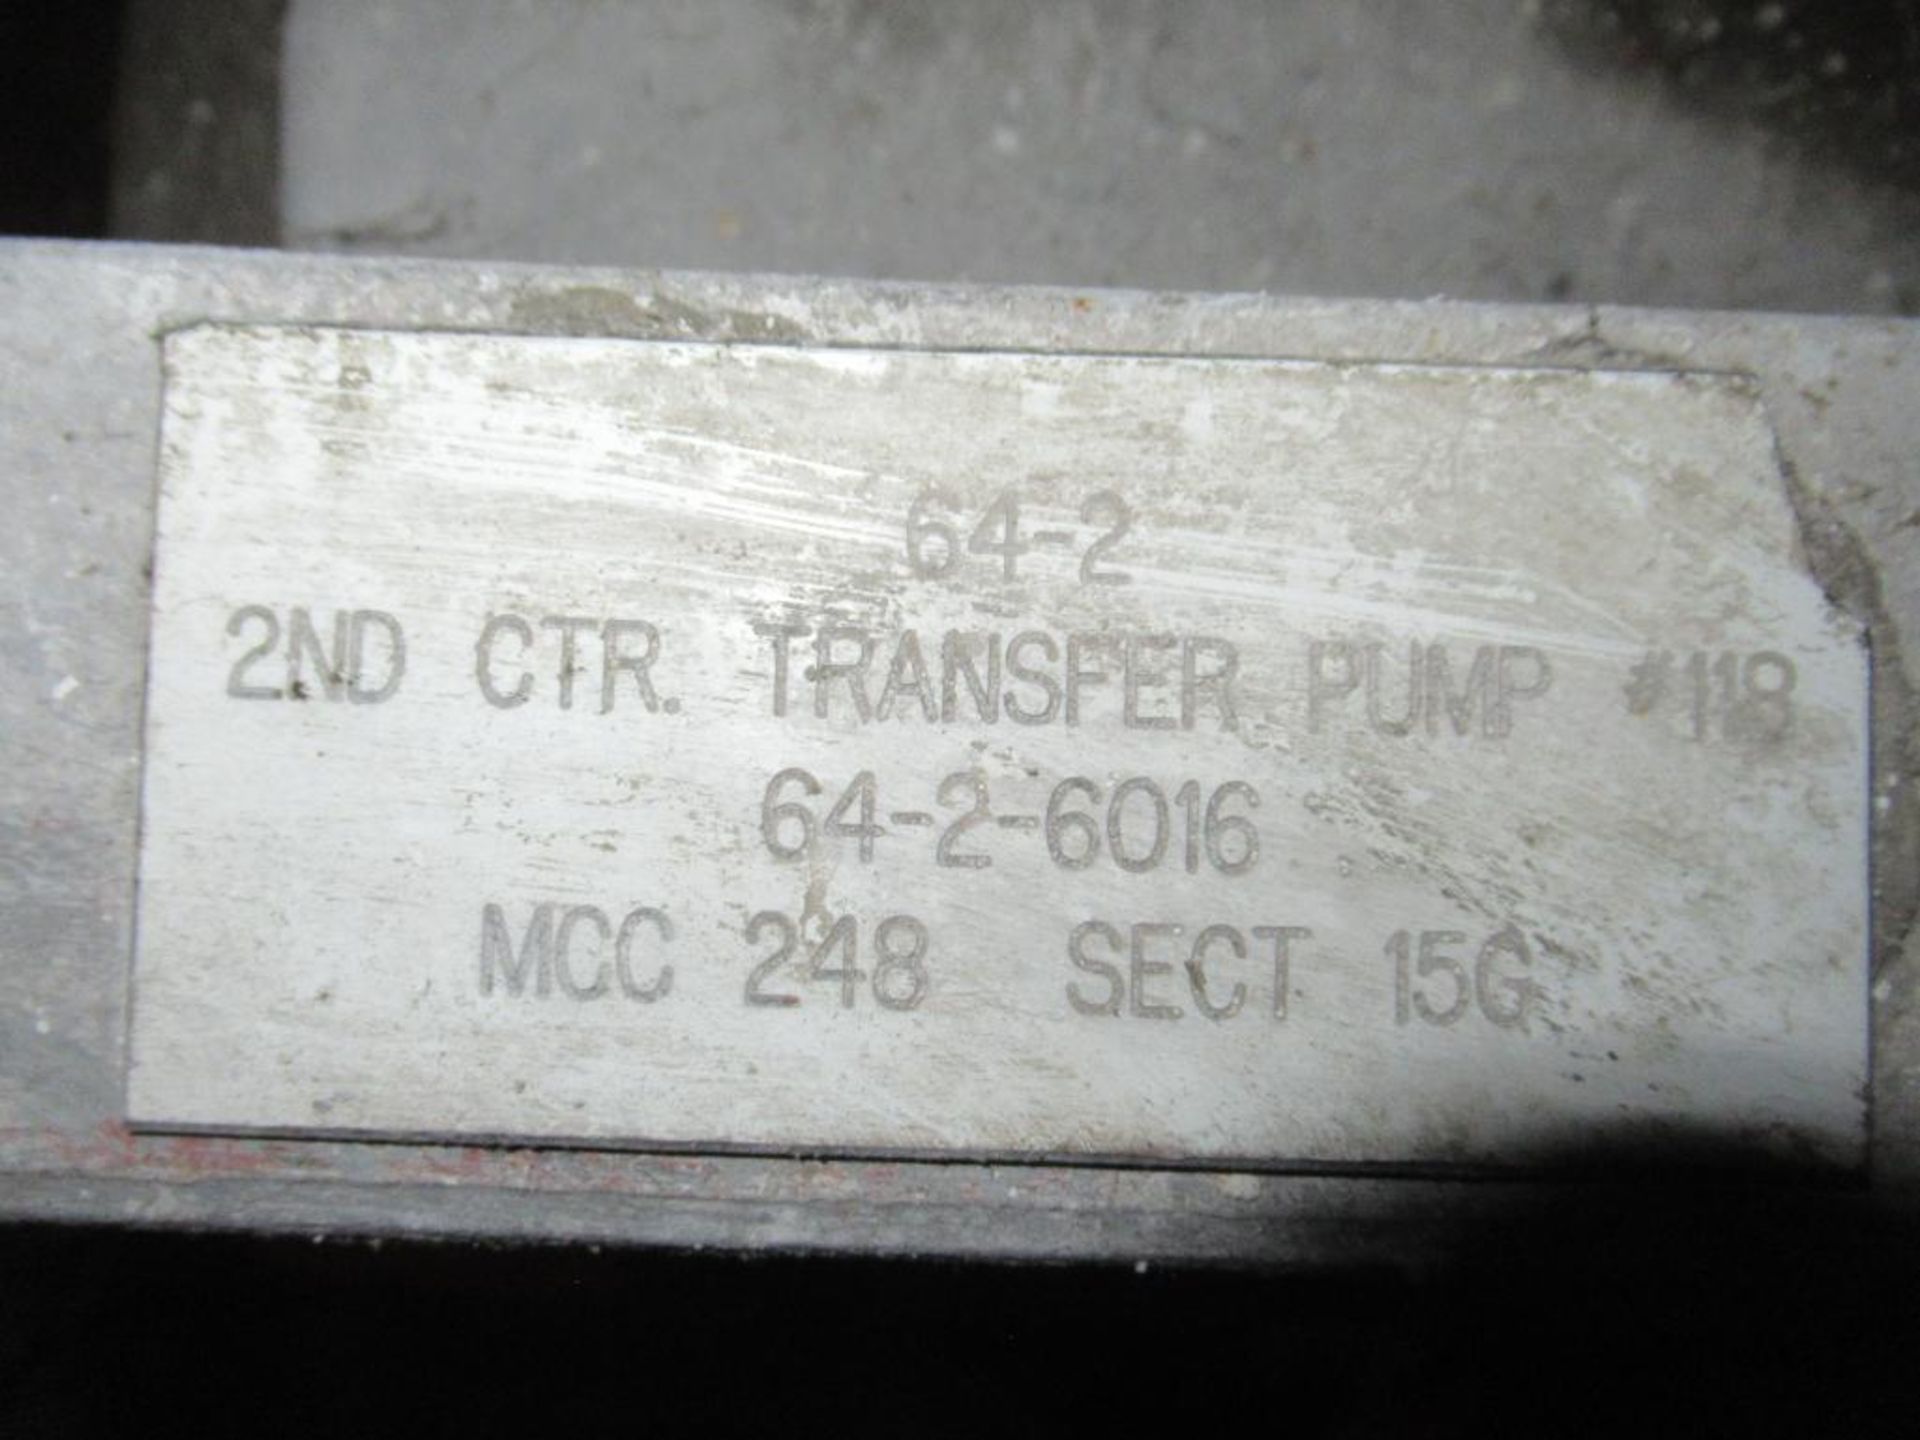 Transfer Pump - Image 3 of 3